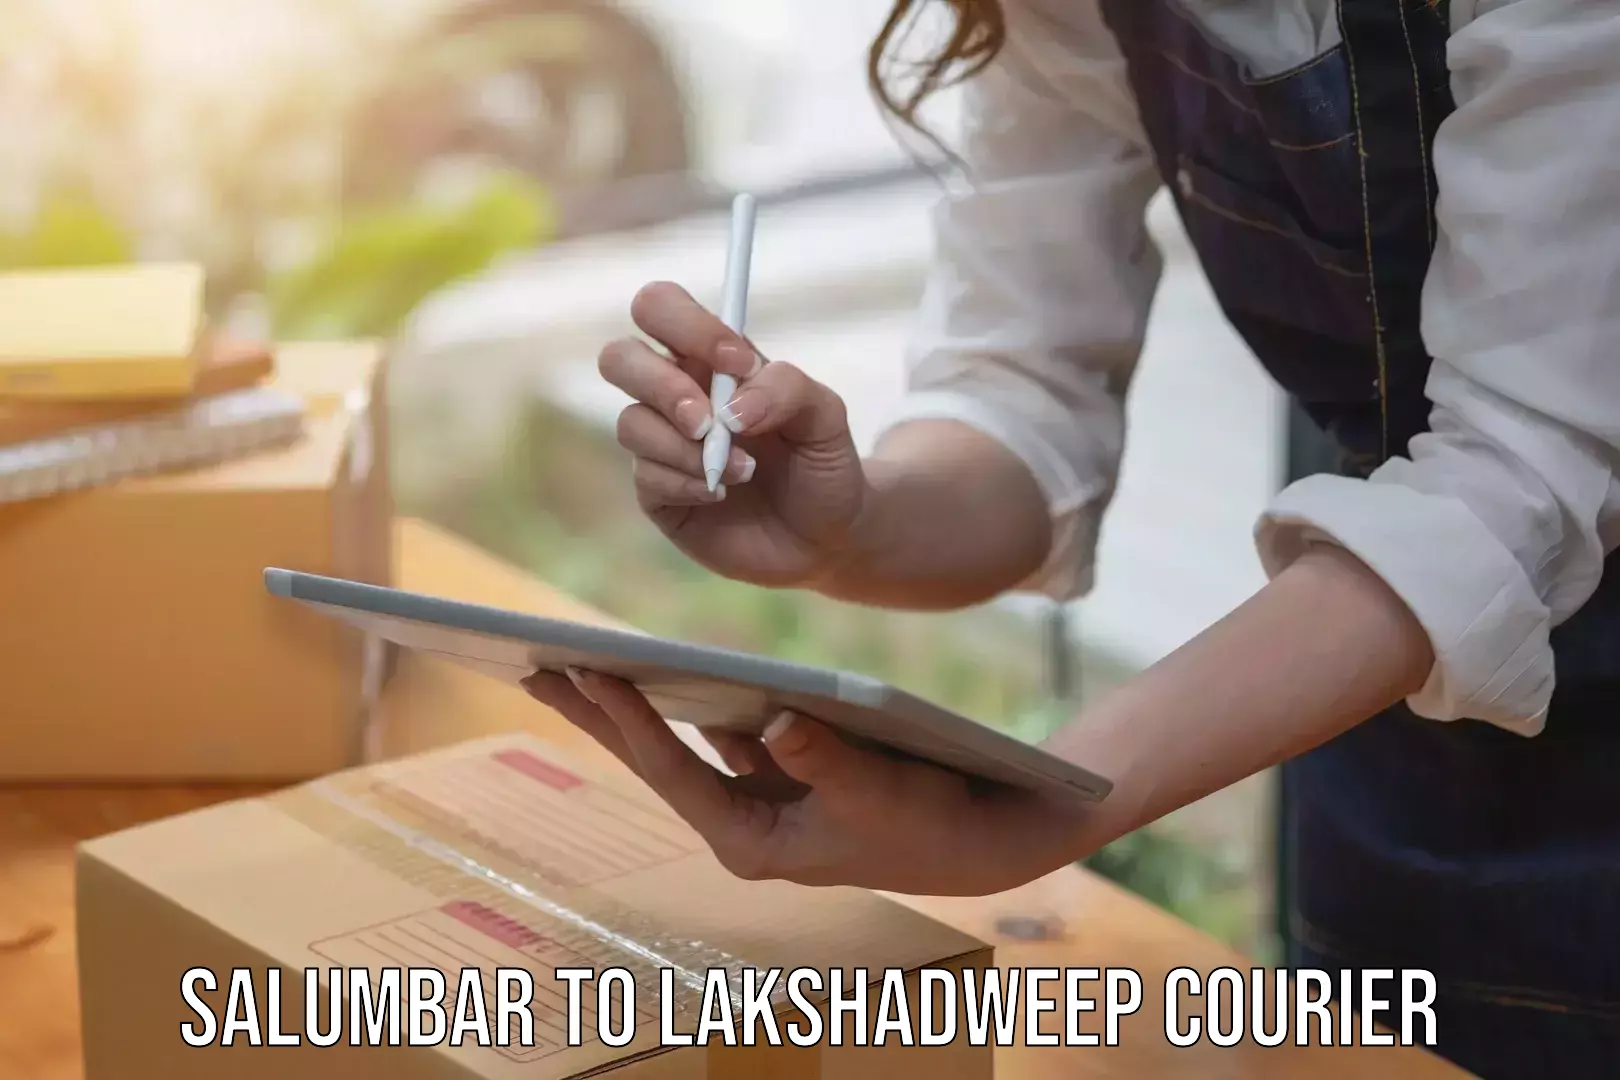 Professional courier handling Salumbar to Lakshadweep